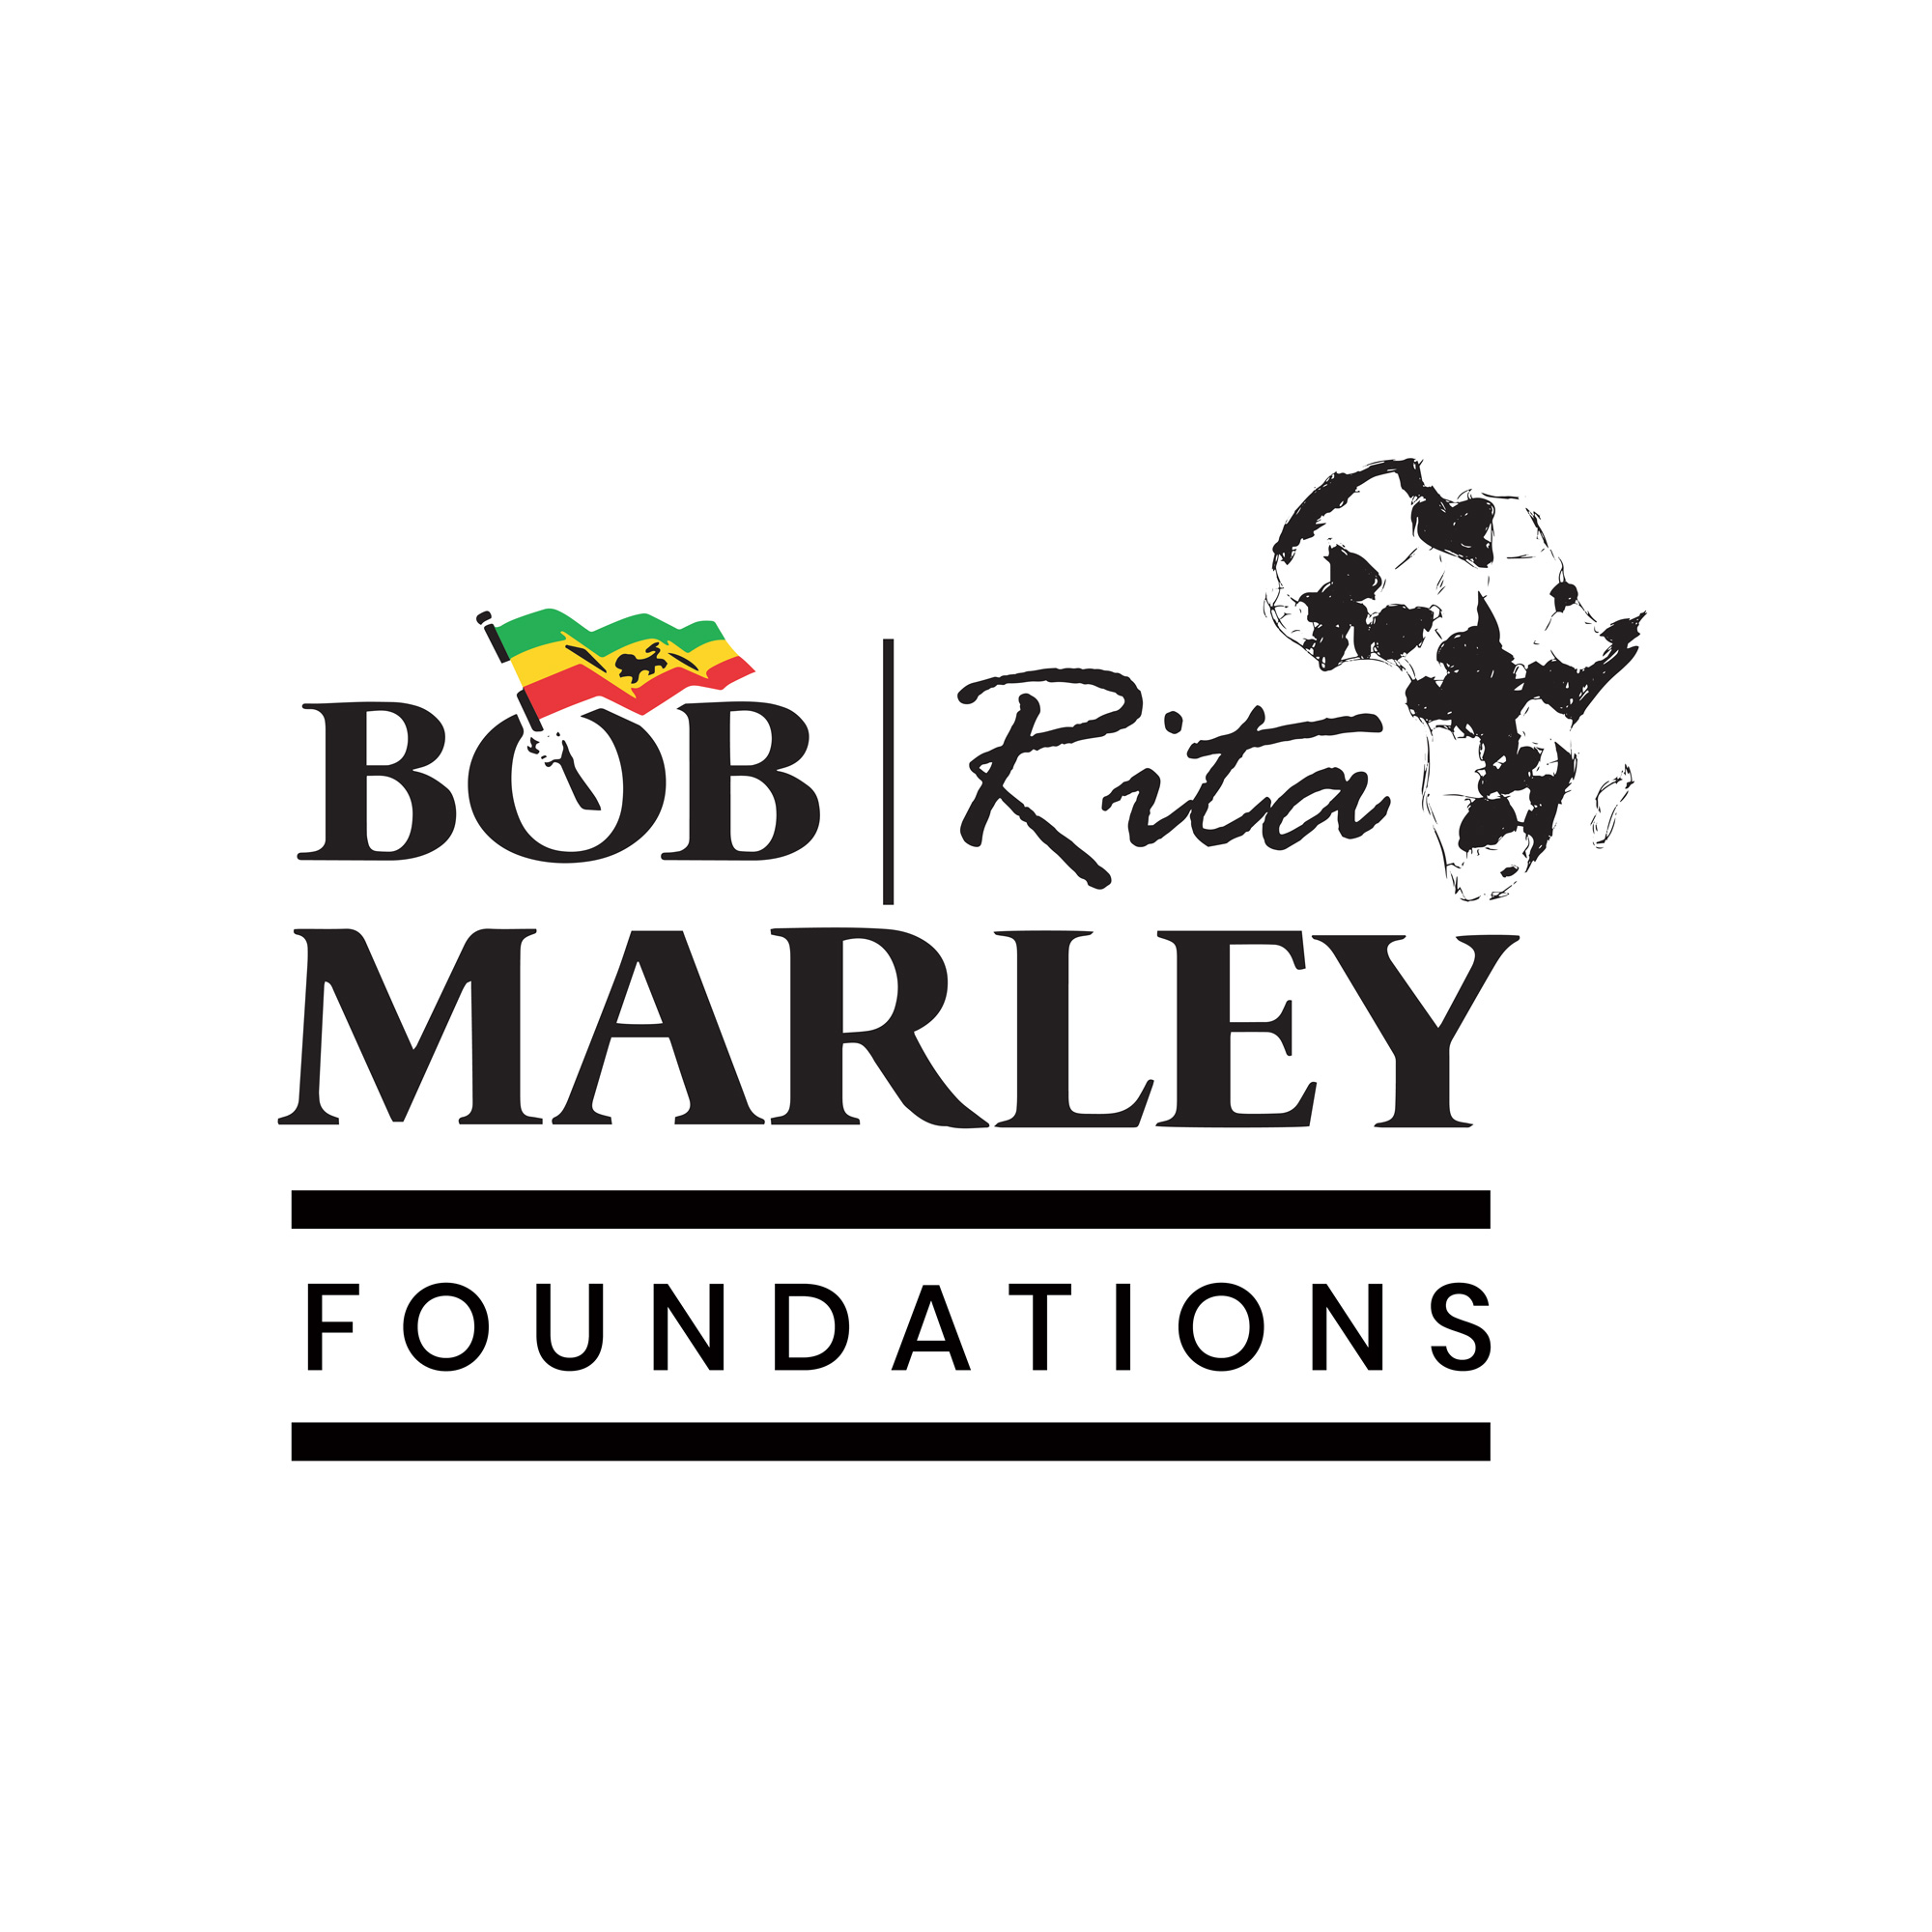 Bob & Rita Marley Foundations – high quality logo download